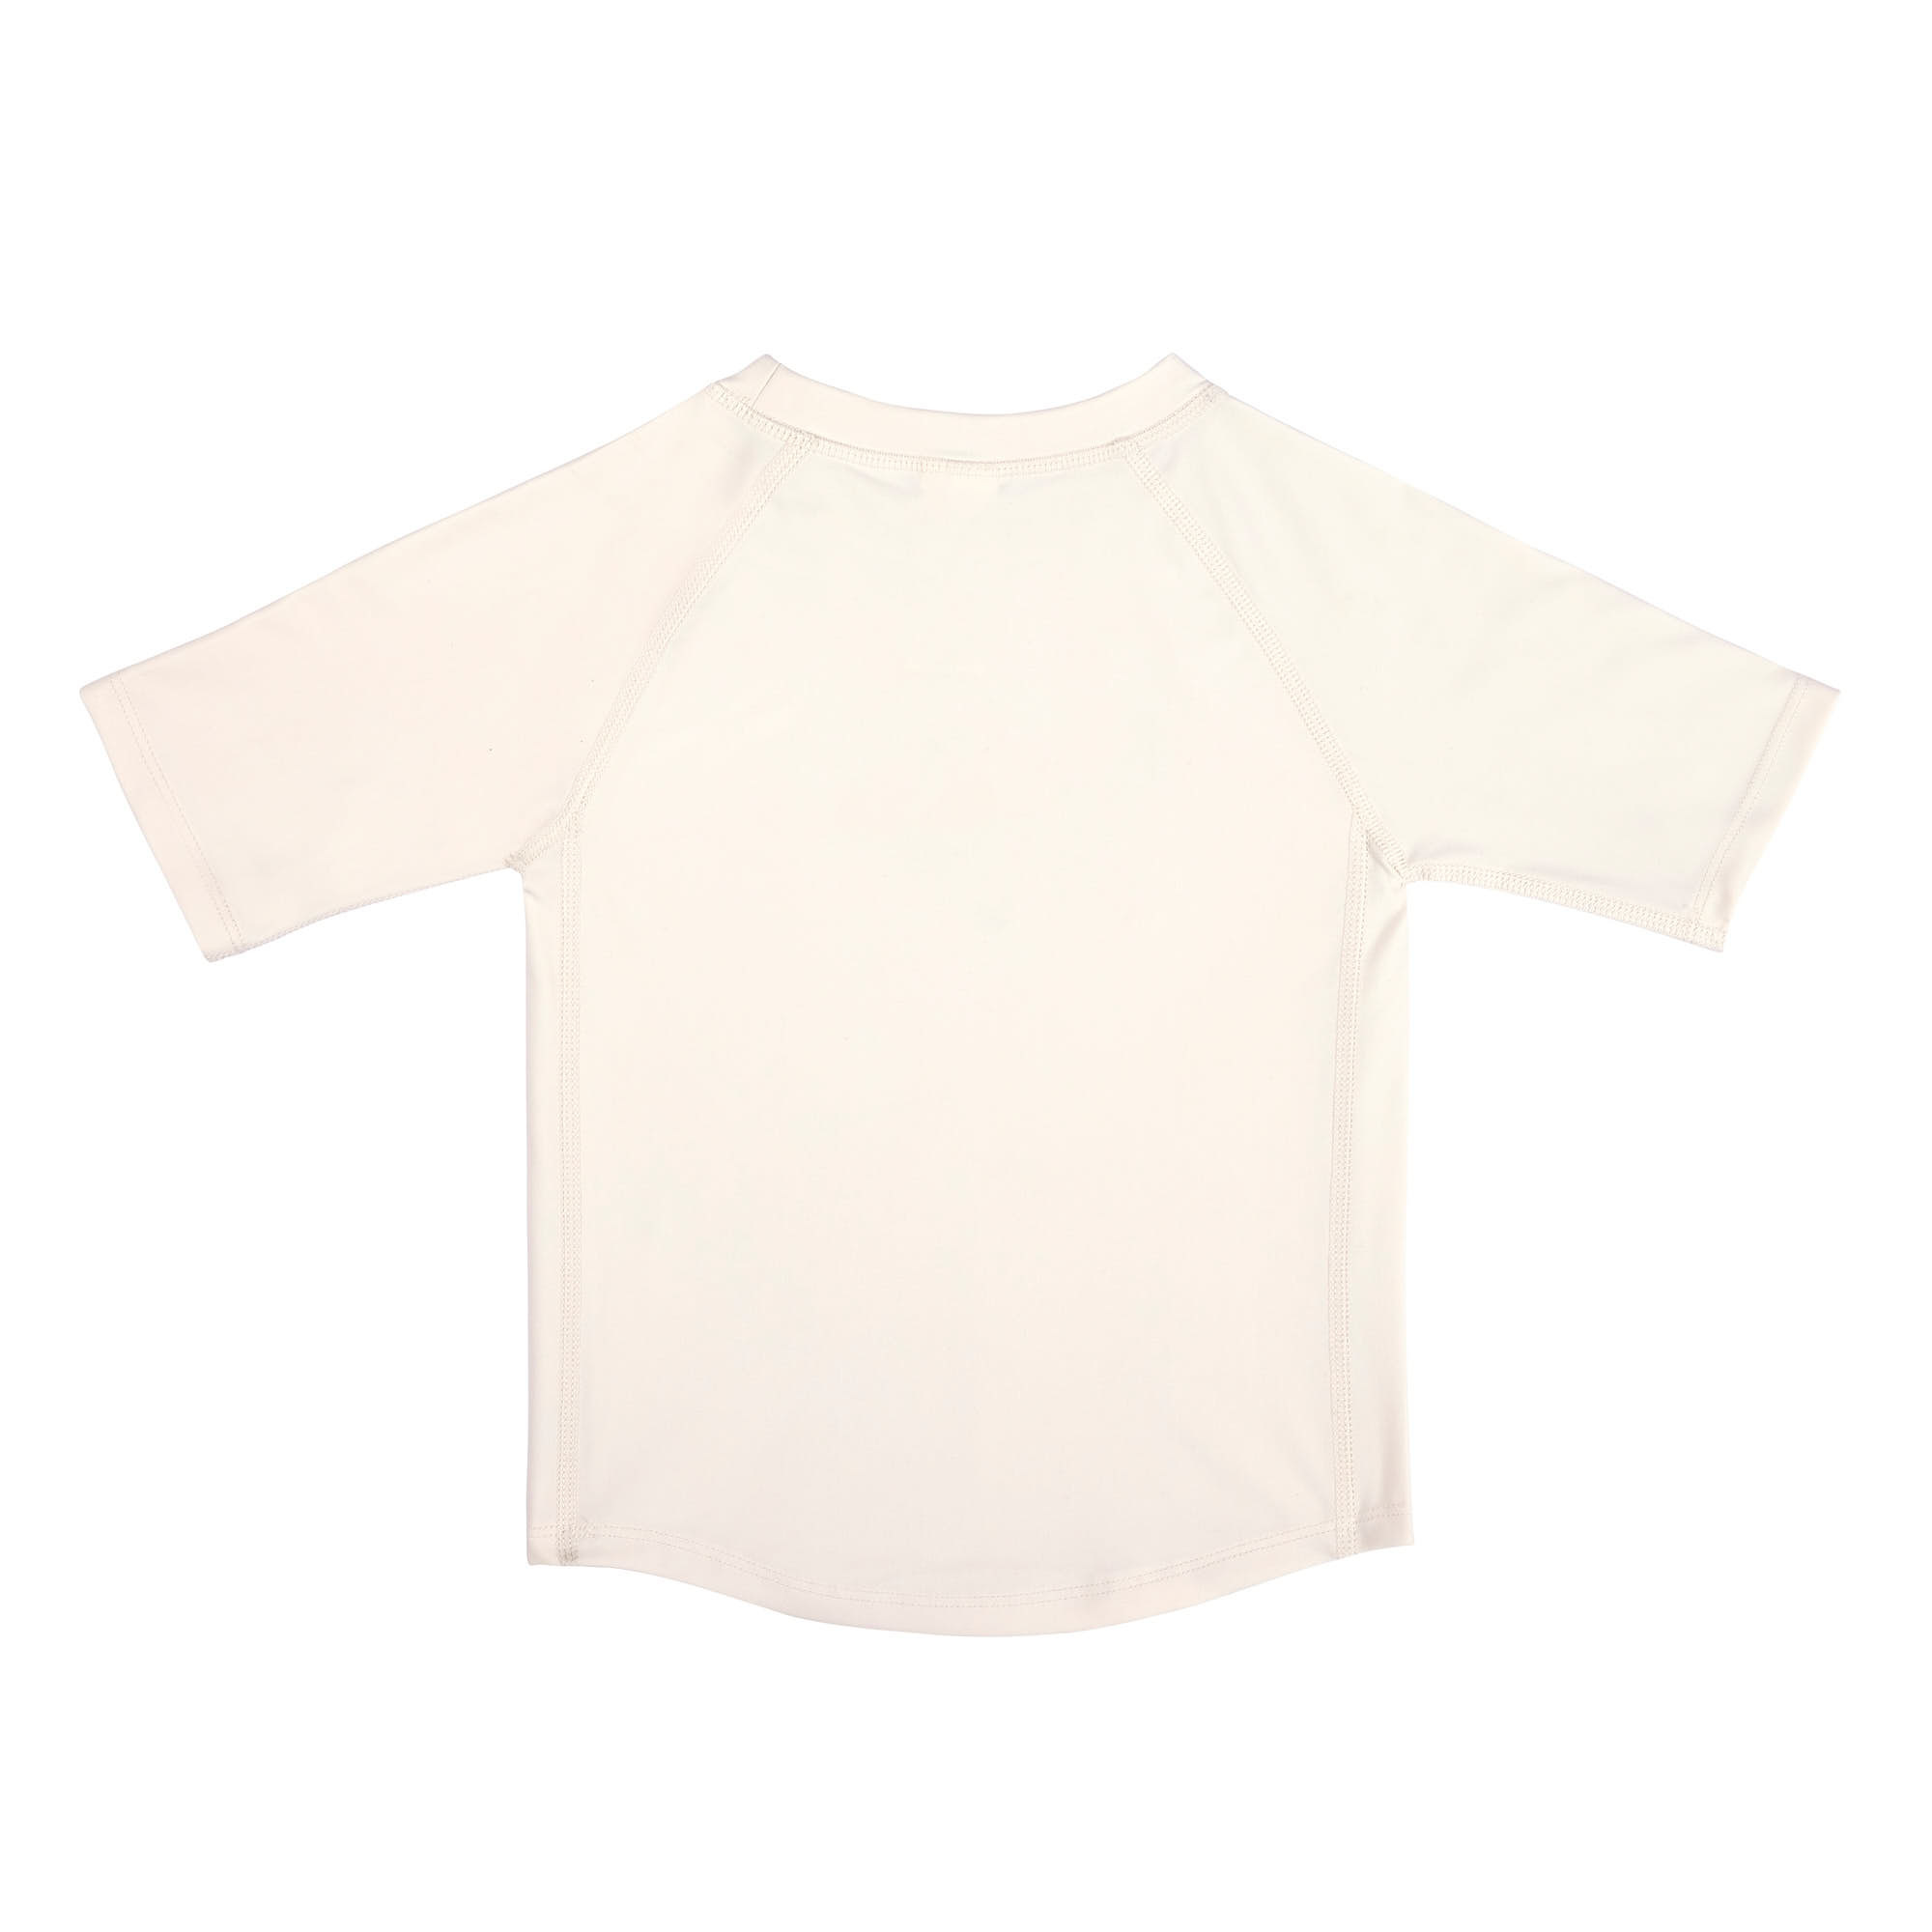 Millimeter Extreem onpeilbaar Anti-UV T-shirt - gebroken wit krab - hopono